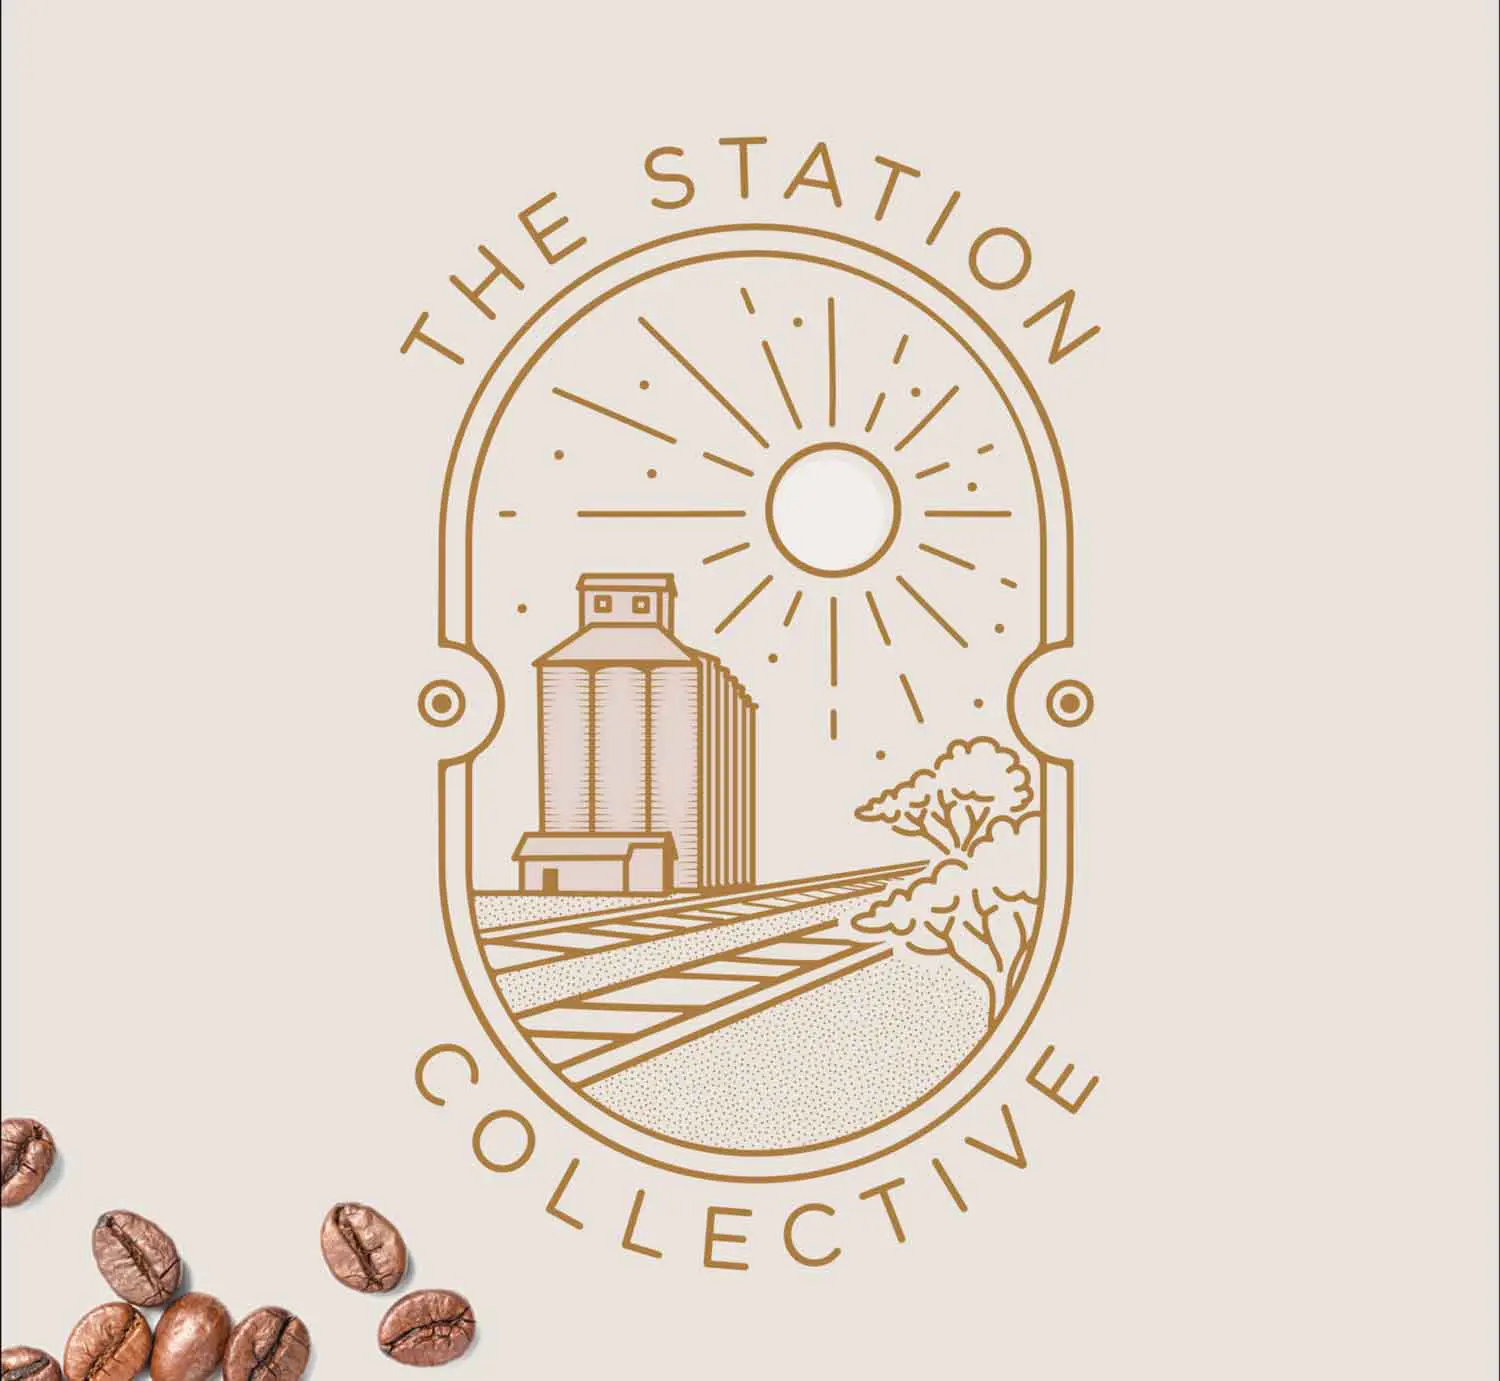 the station logo design from Alekxa